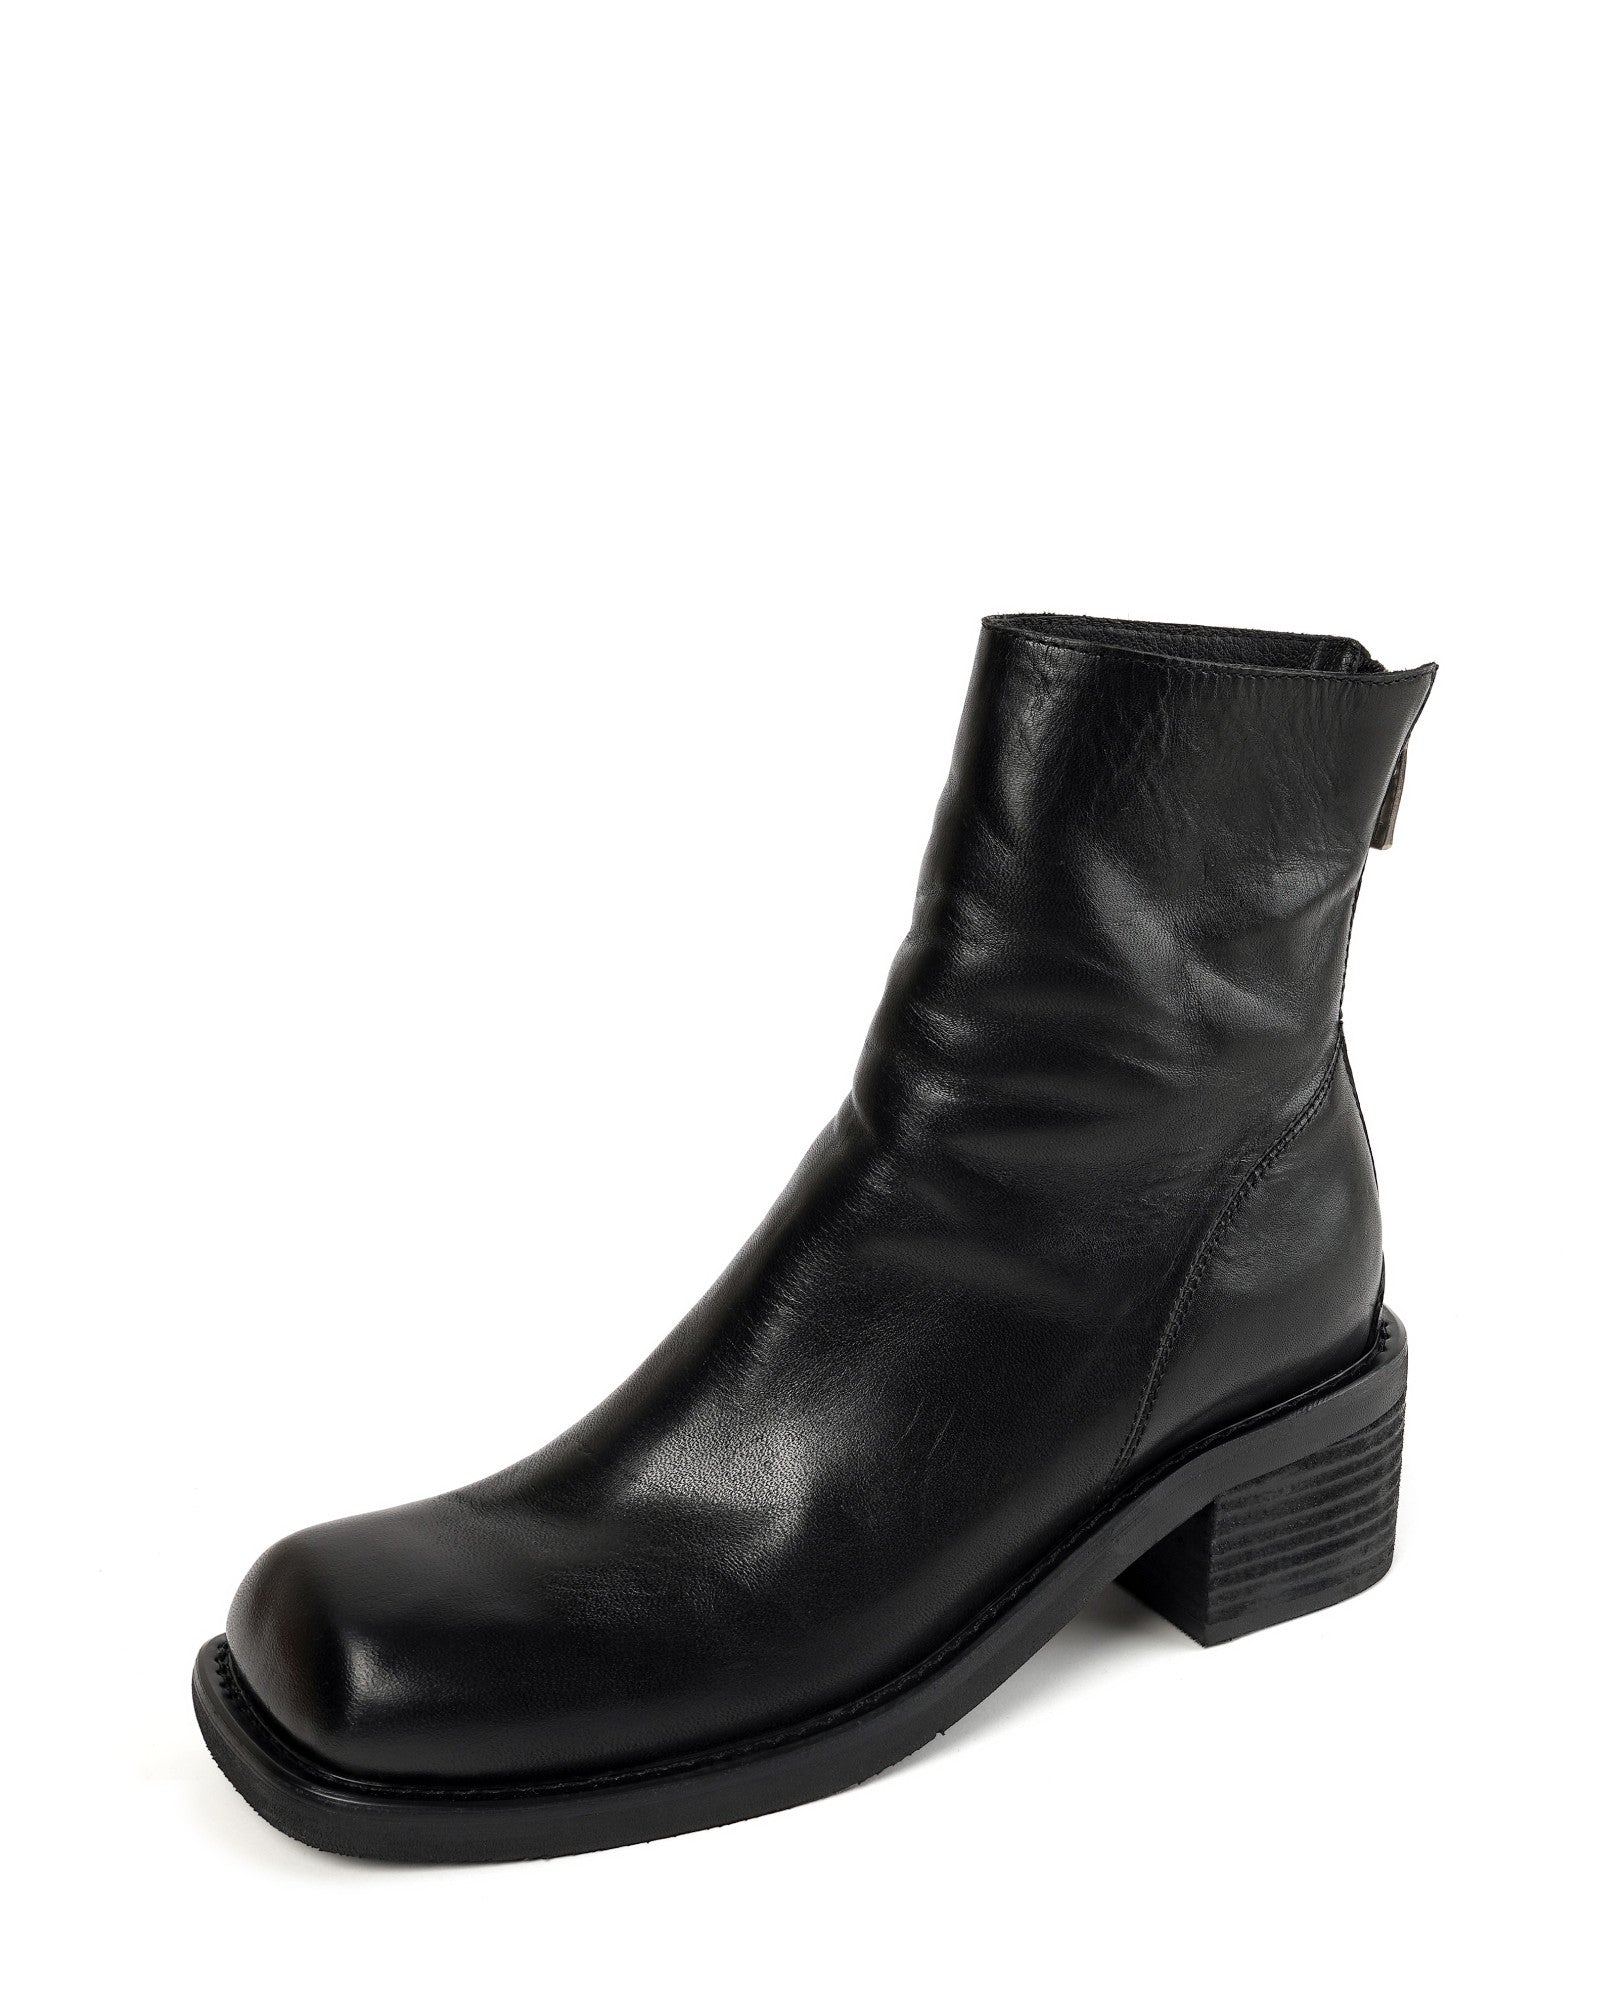 Vefa-Square-Toe-Black-Leather-Boots